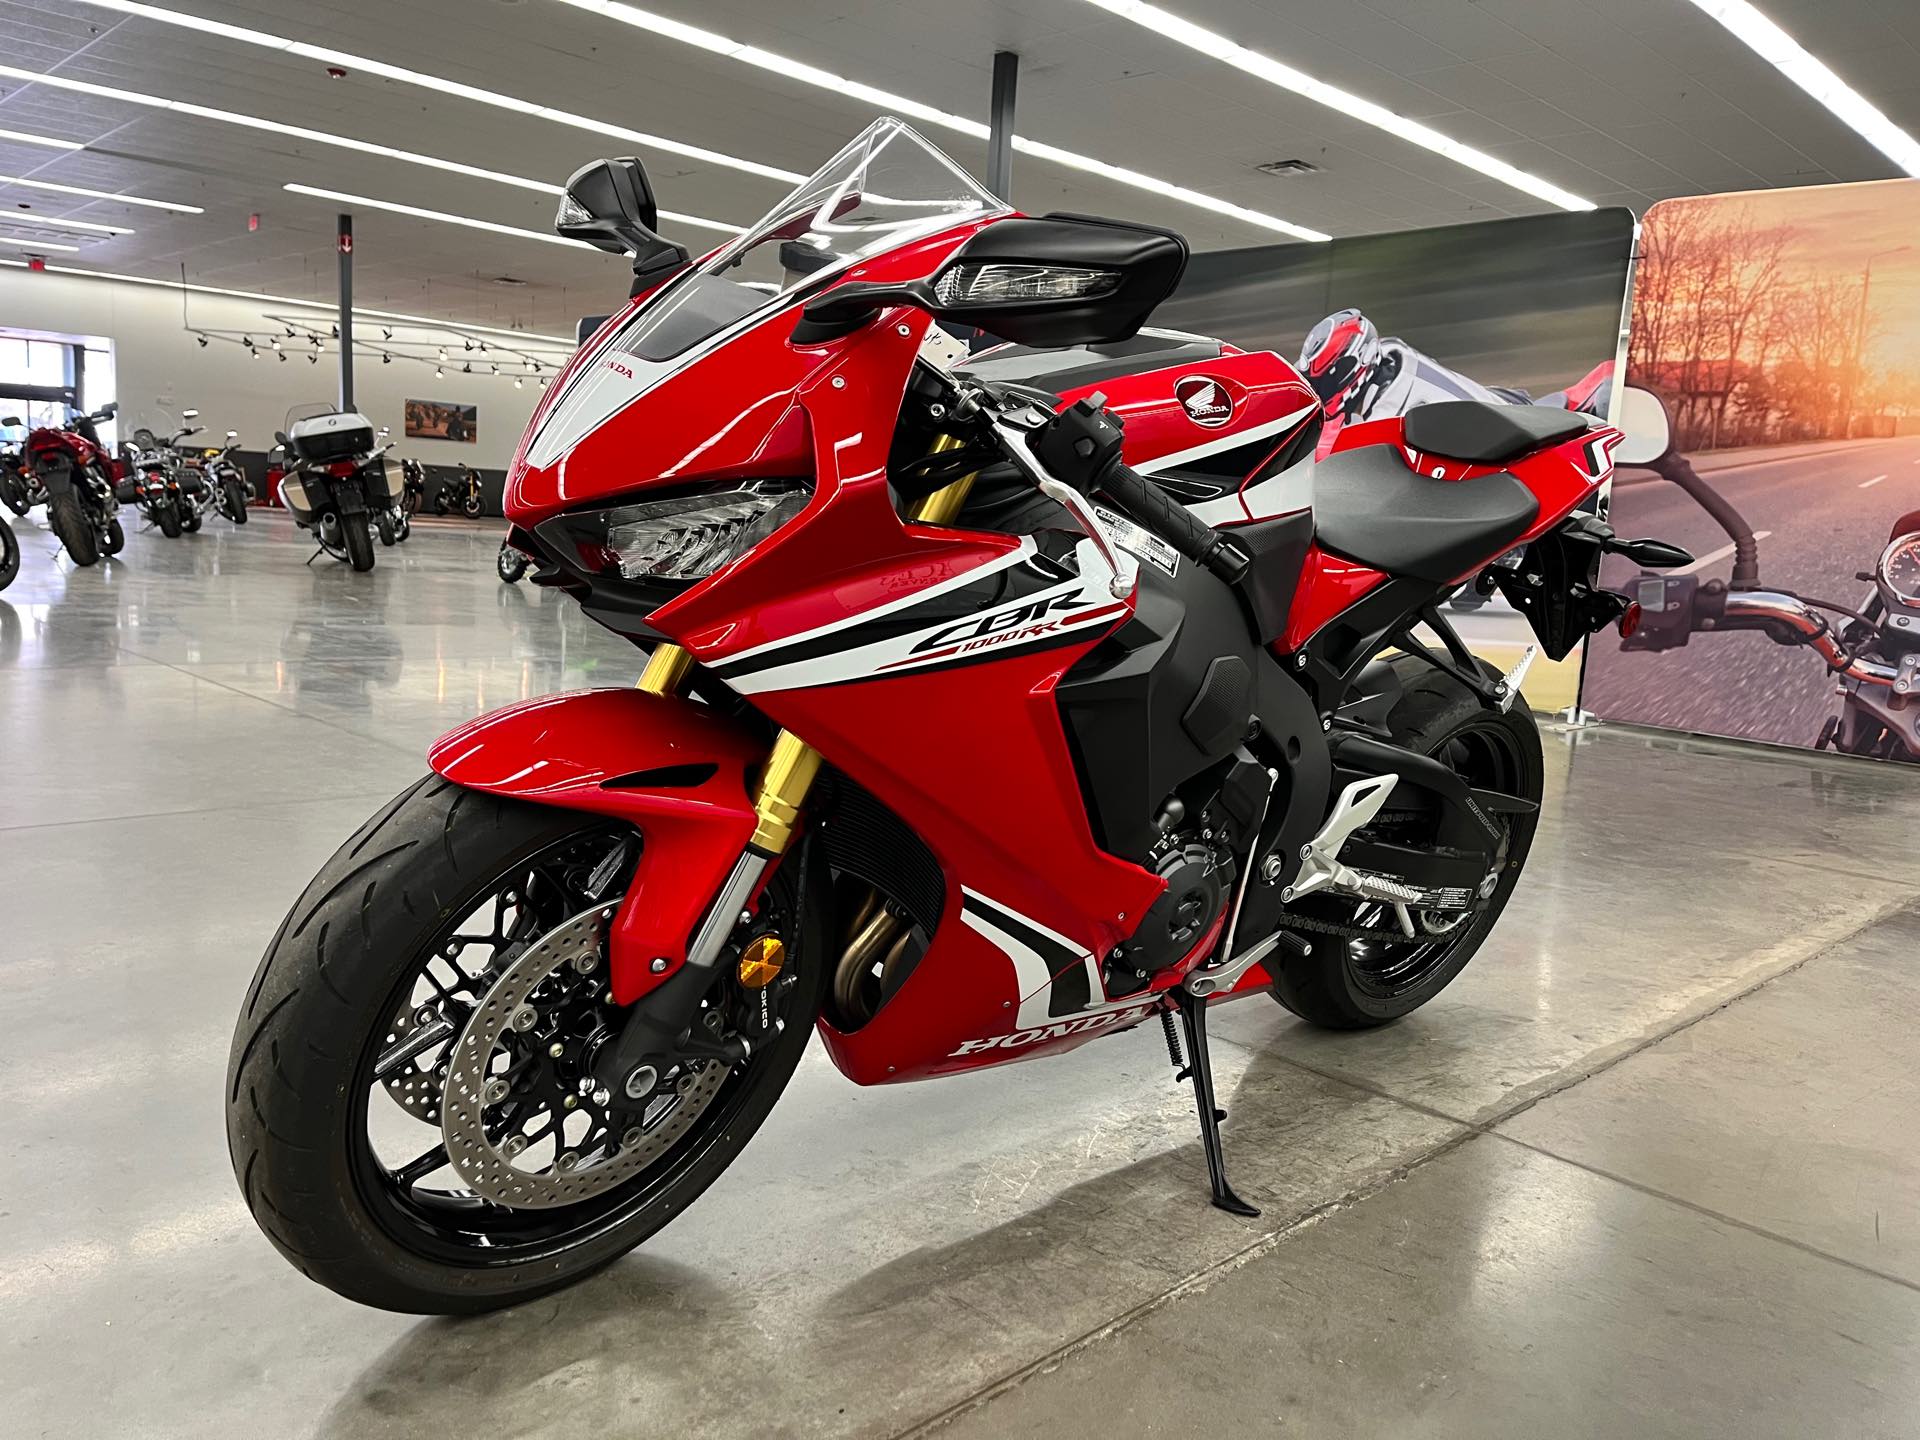 2021 Honda CBR1000RR Base at Aces Motorcycles - Denver